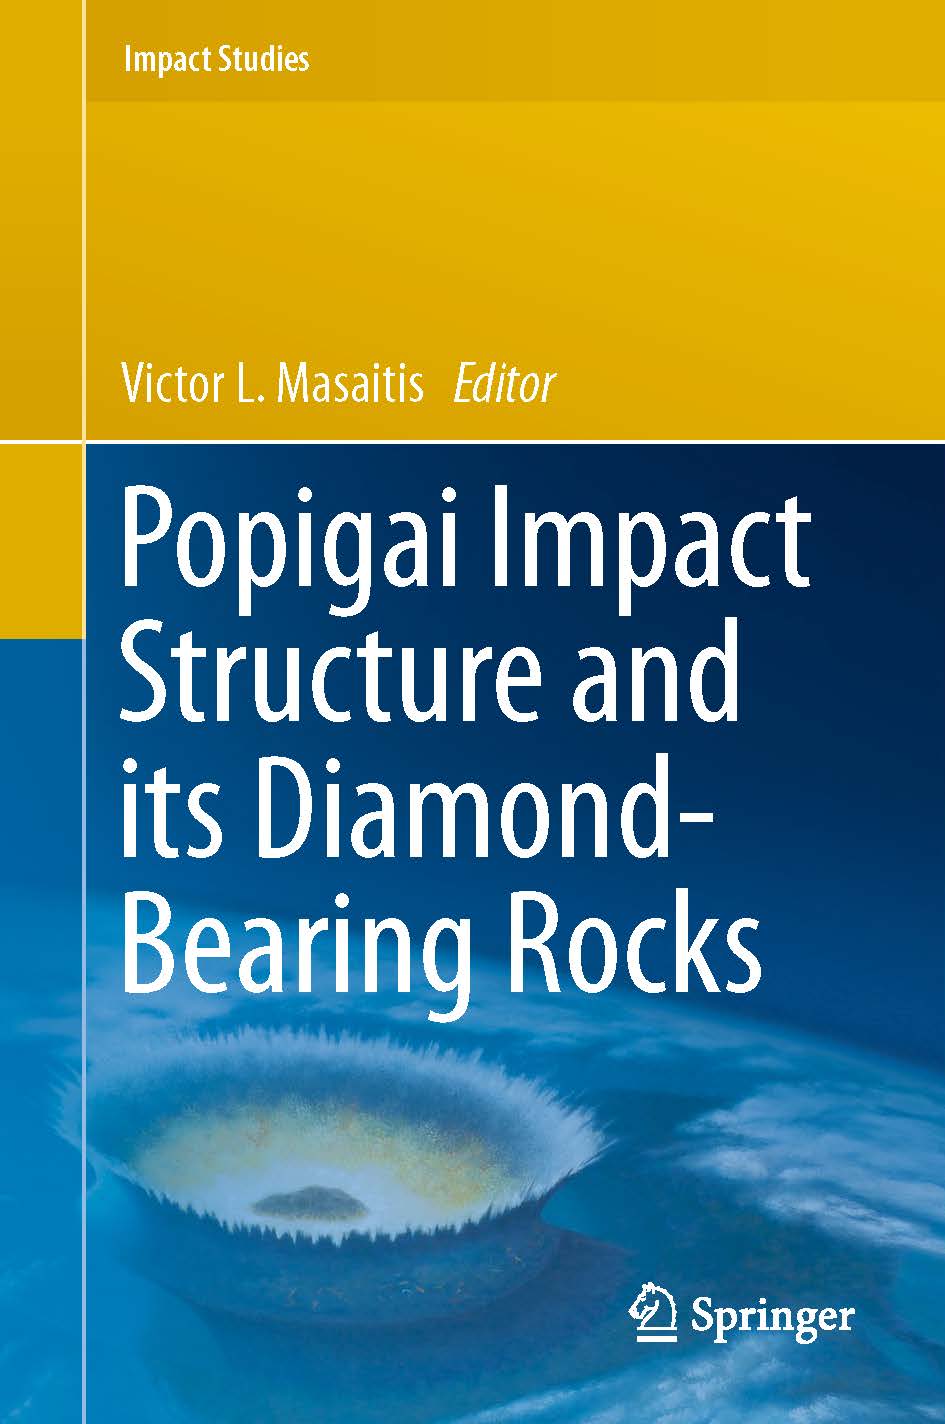 页面提取自－2019_Book_Popigai Impact Structure and its Diamond-Bearing Rocks.jpg